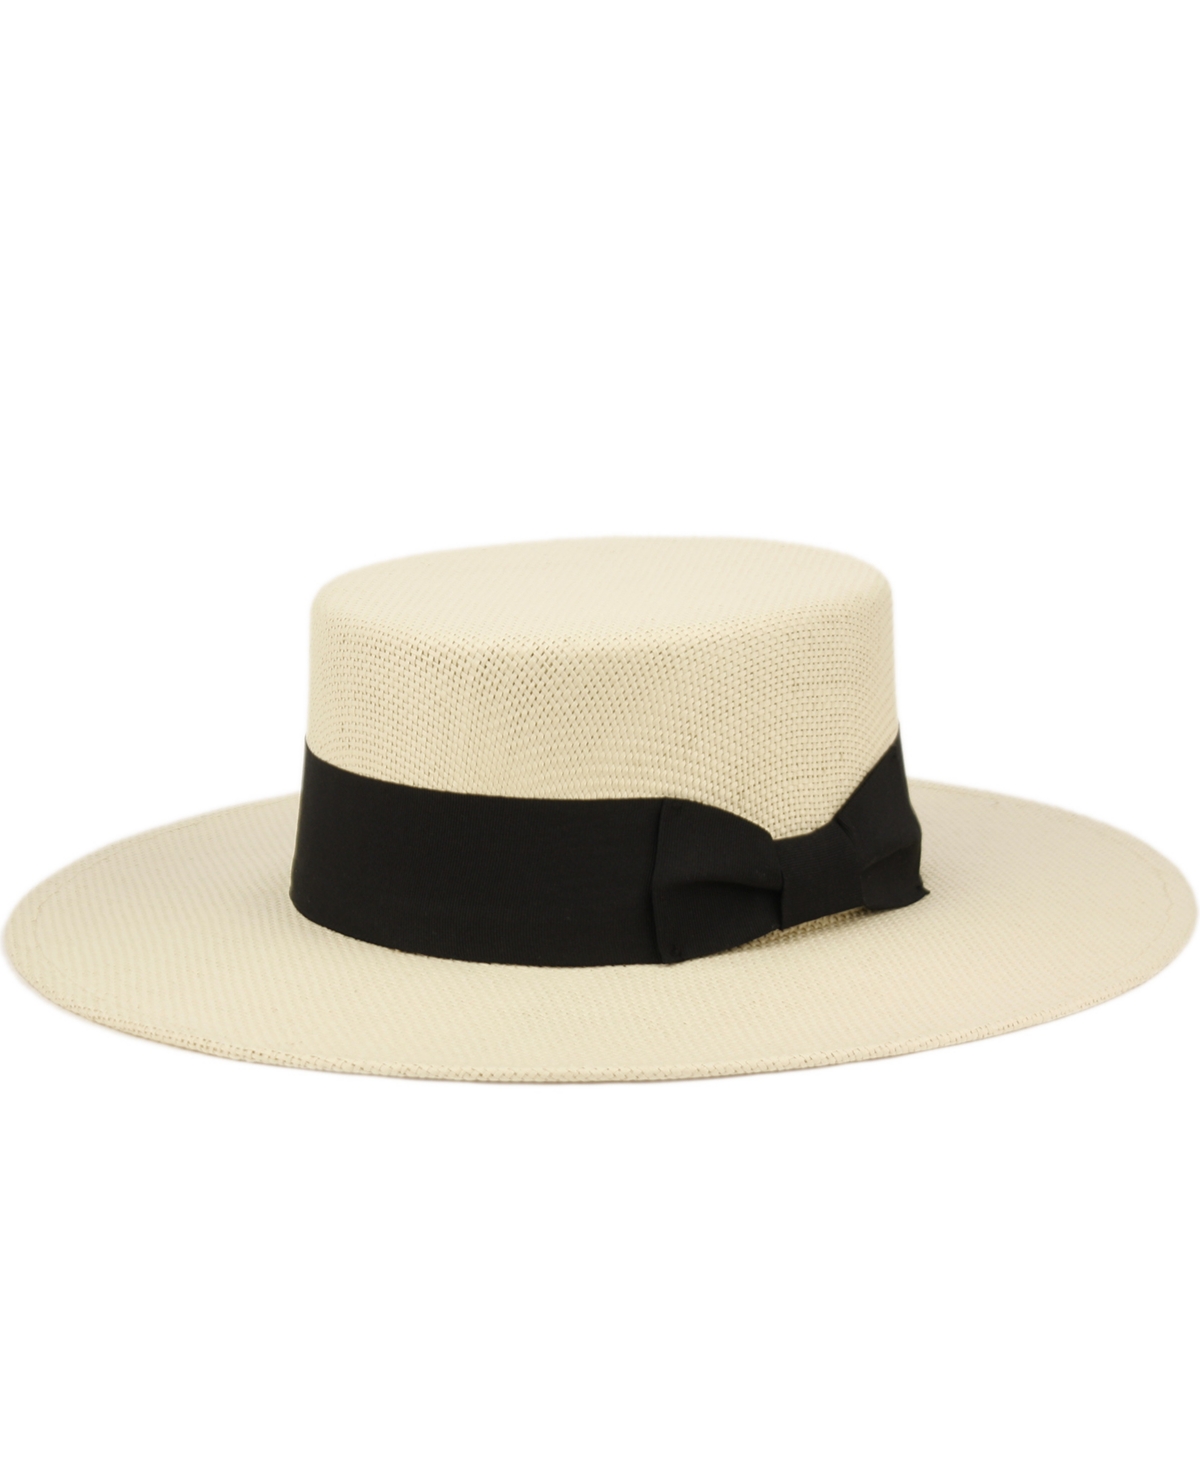 Flat Brim Unisex Boater Straw Sun Hat - Natural